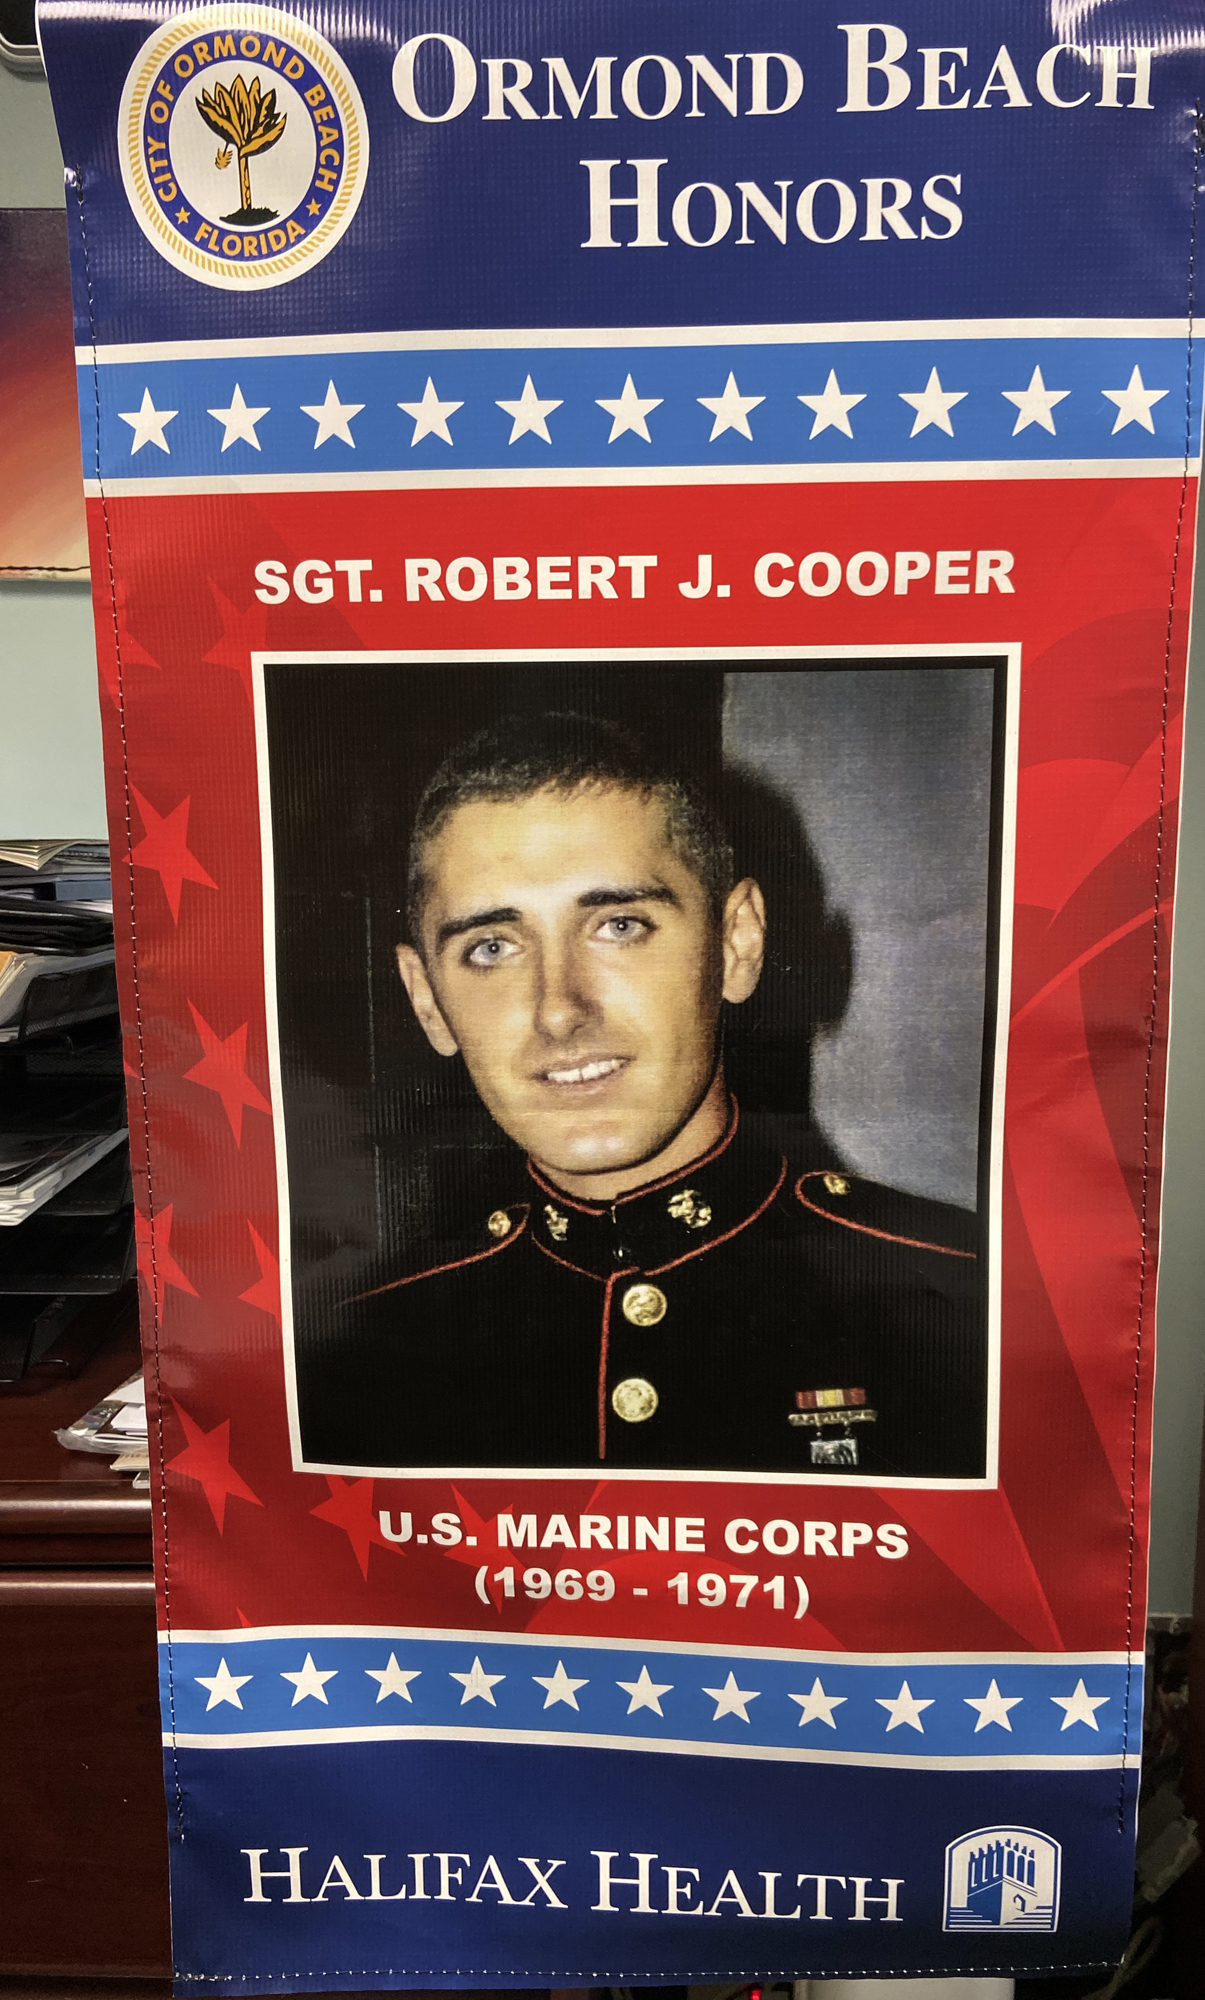 The commemorative banner for Sgt. Robert Cooper.